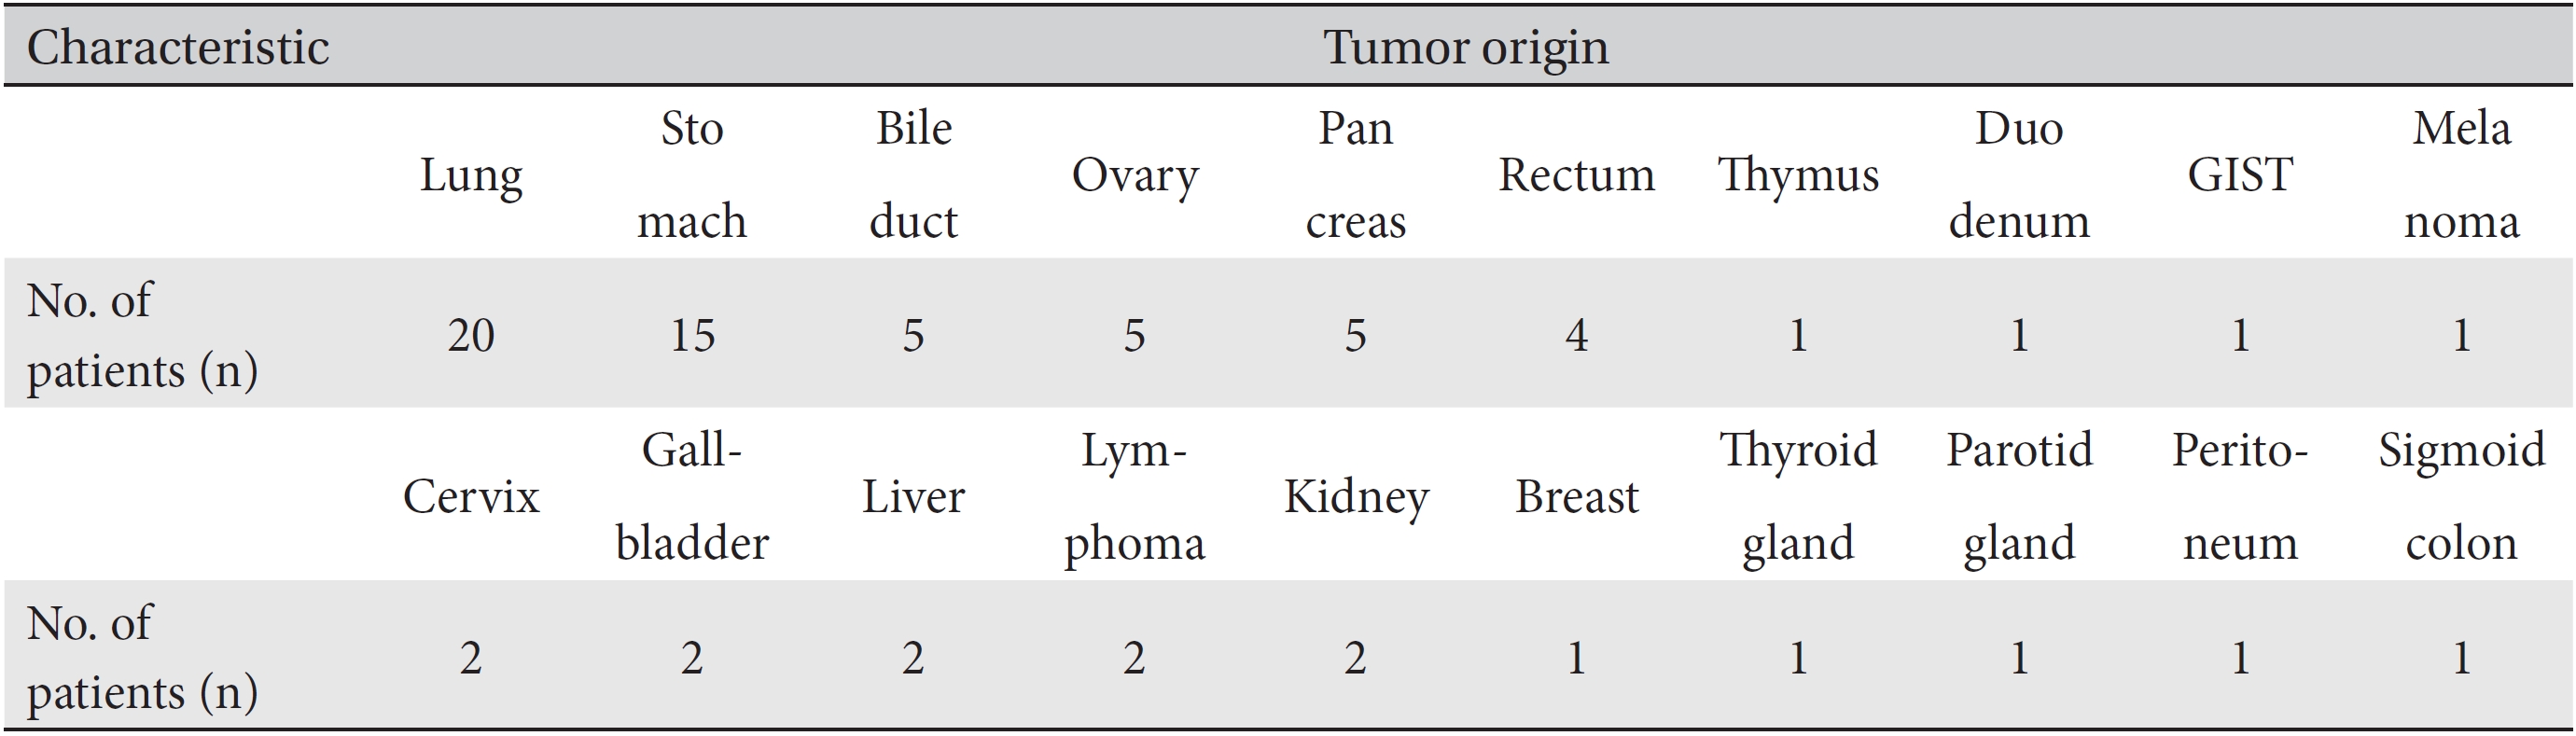 Tumor origins of patients